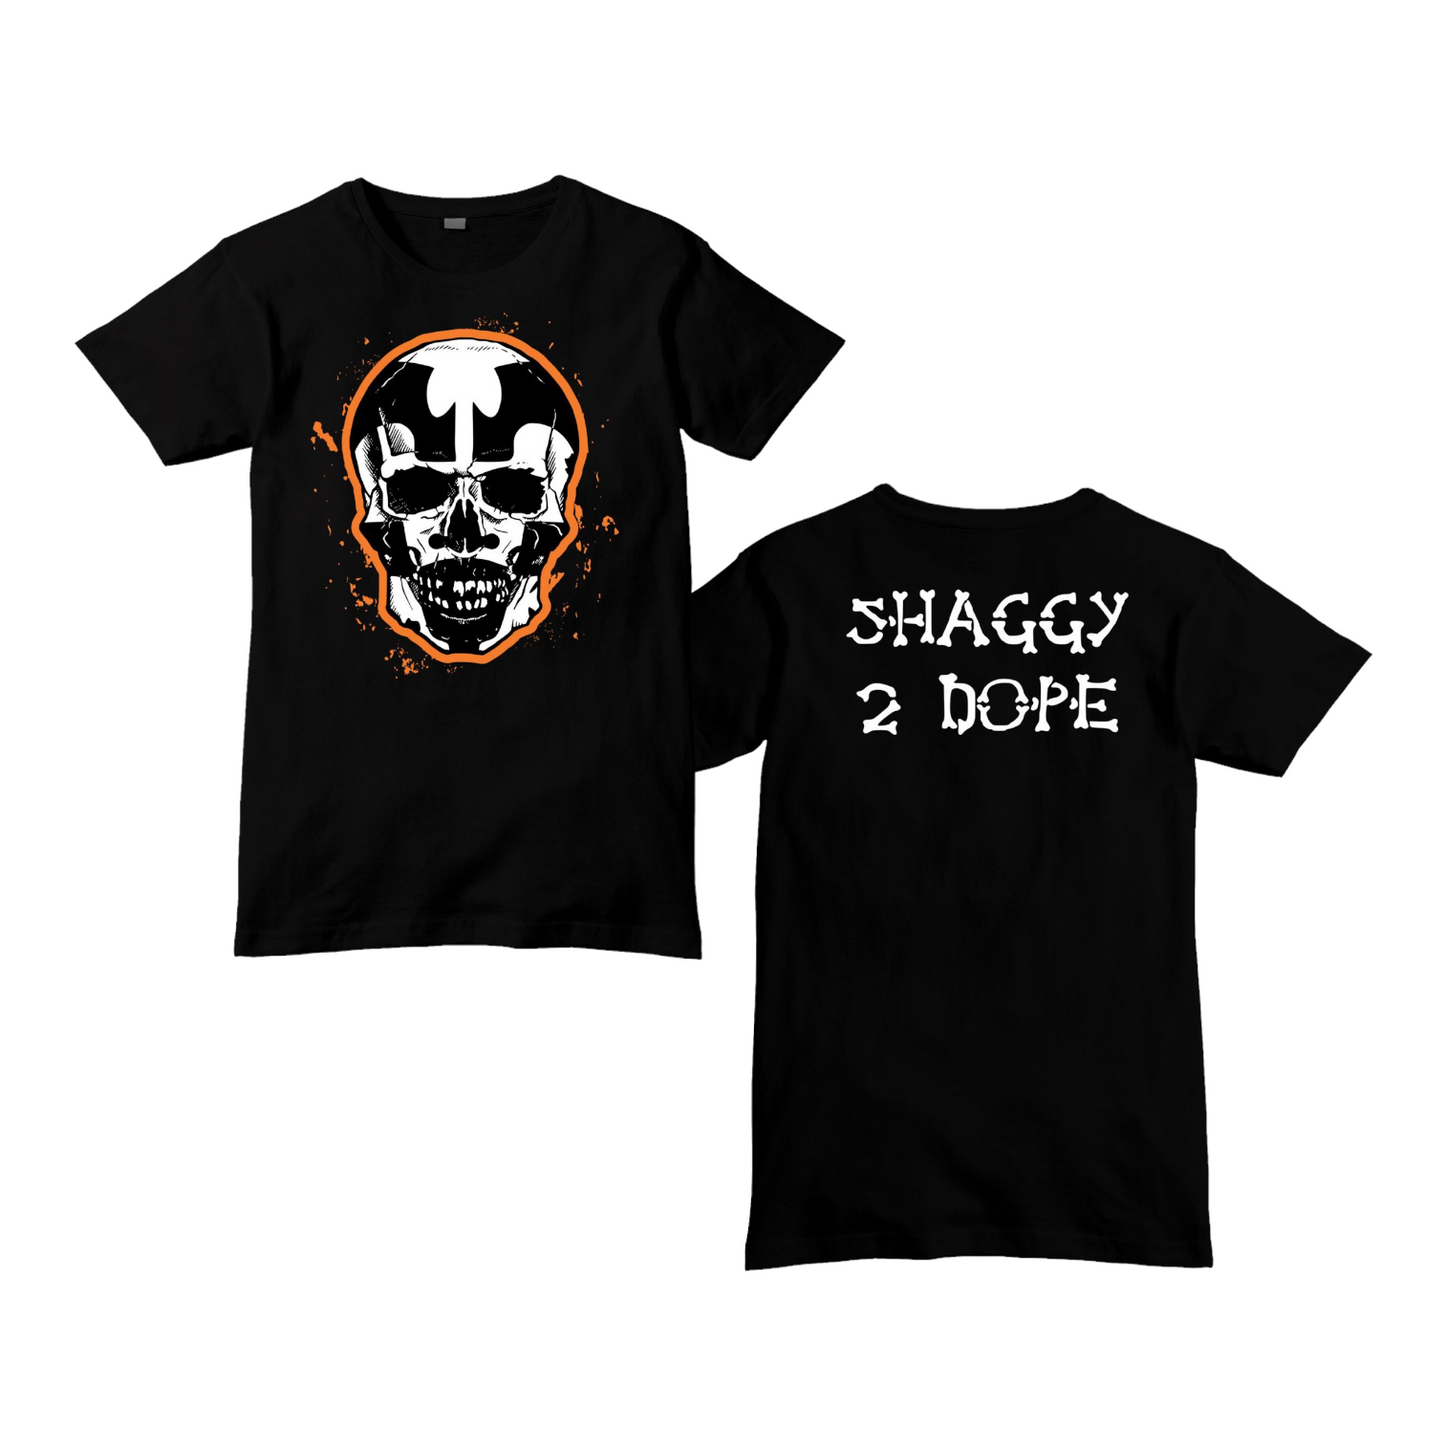 Shaggy 2 Dope Skull Shirt